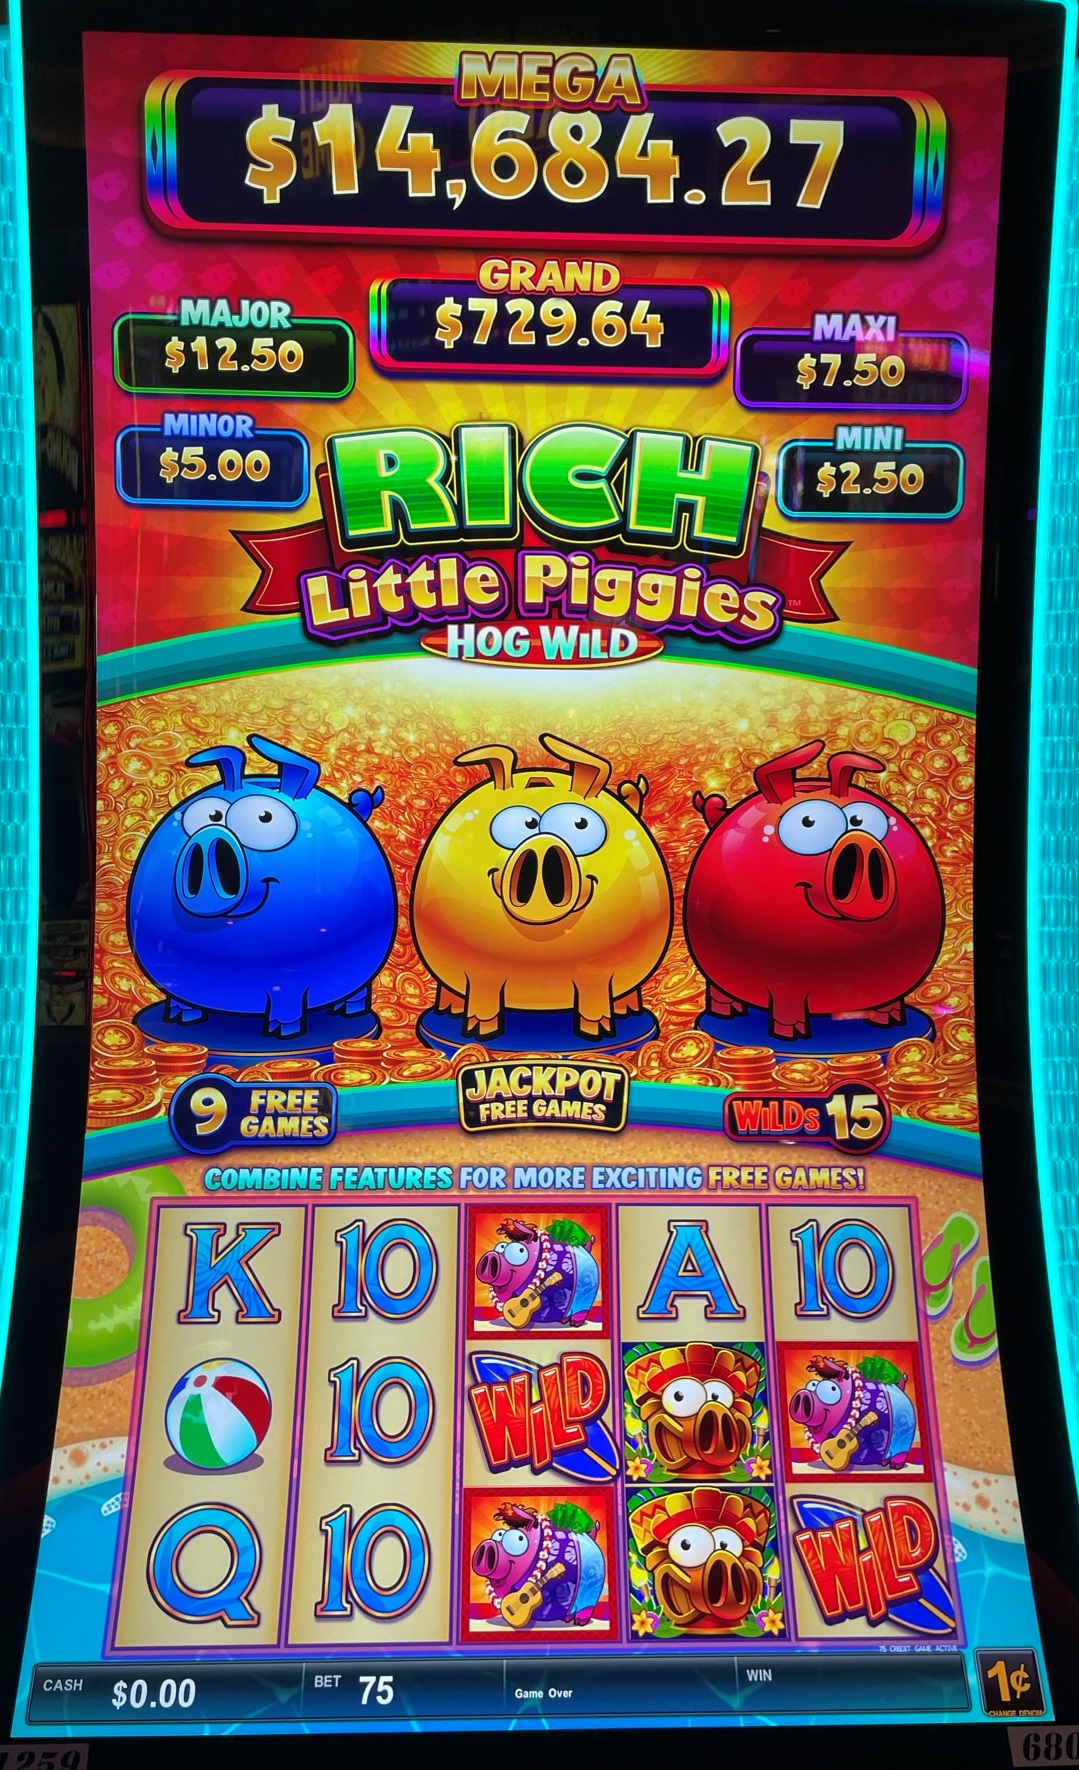 10 Times Wins Slots, Real Money Slot Machine & Free Play Demo